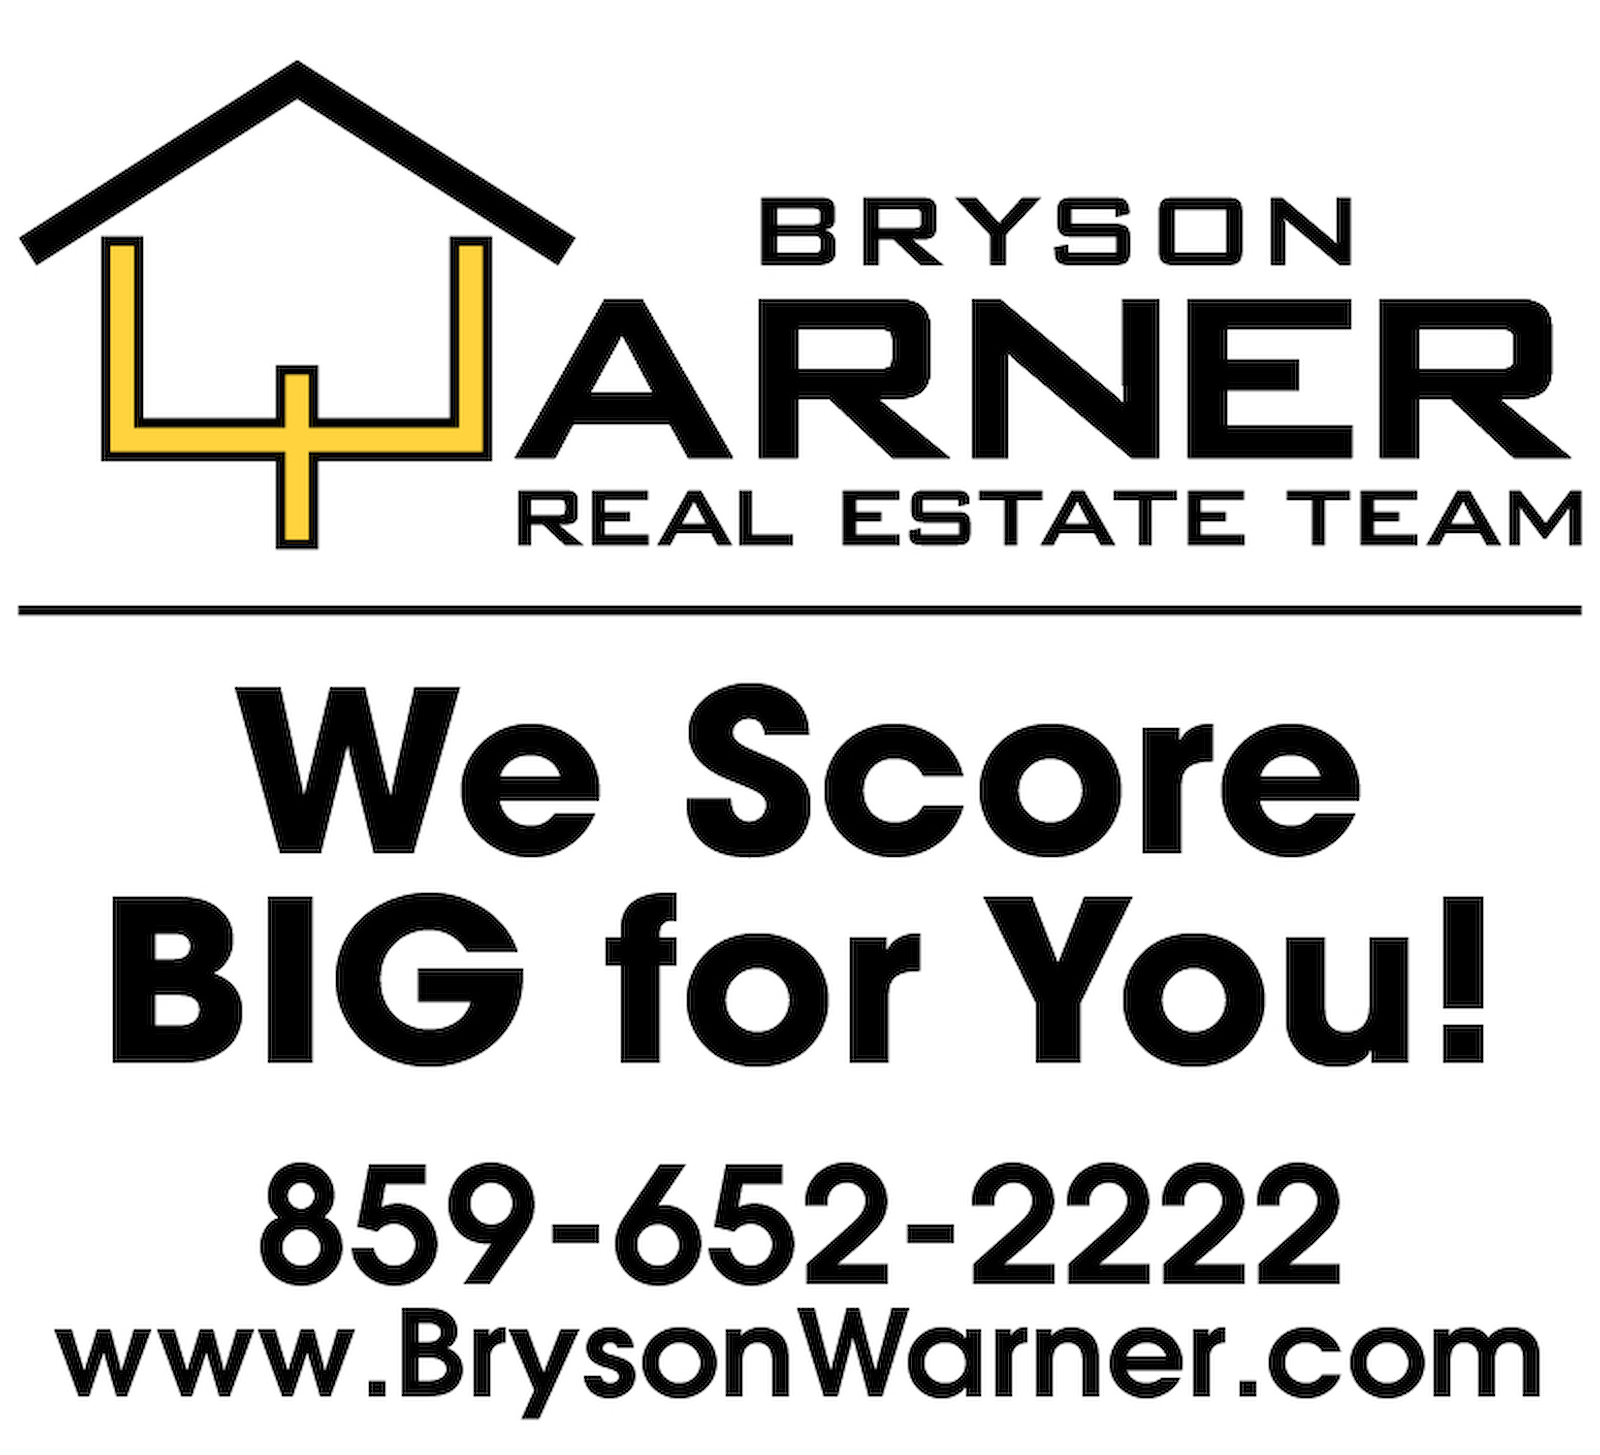 Bryson Warner Real Estate